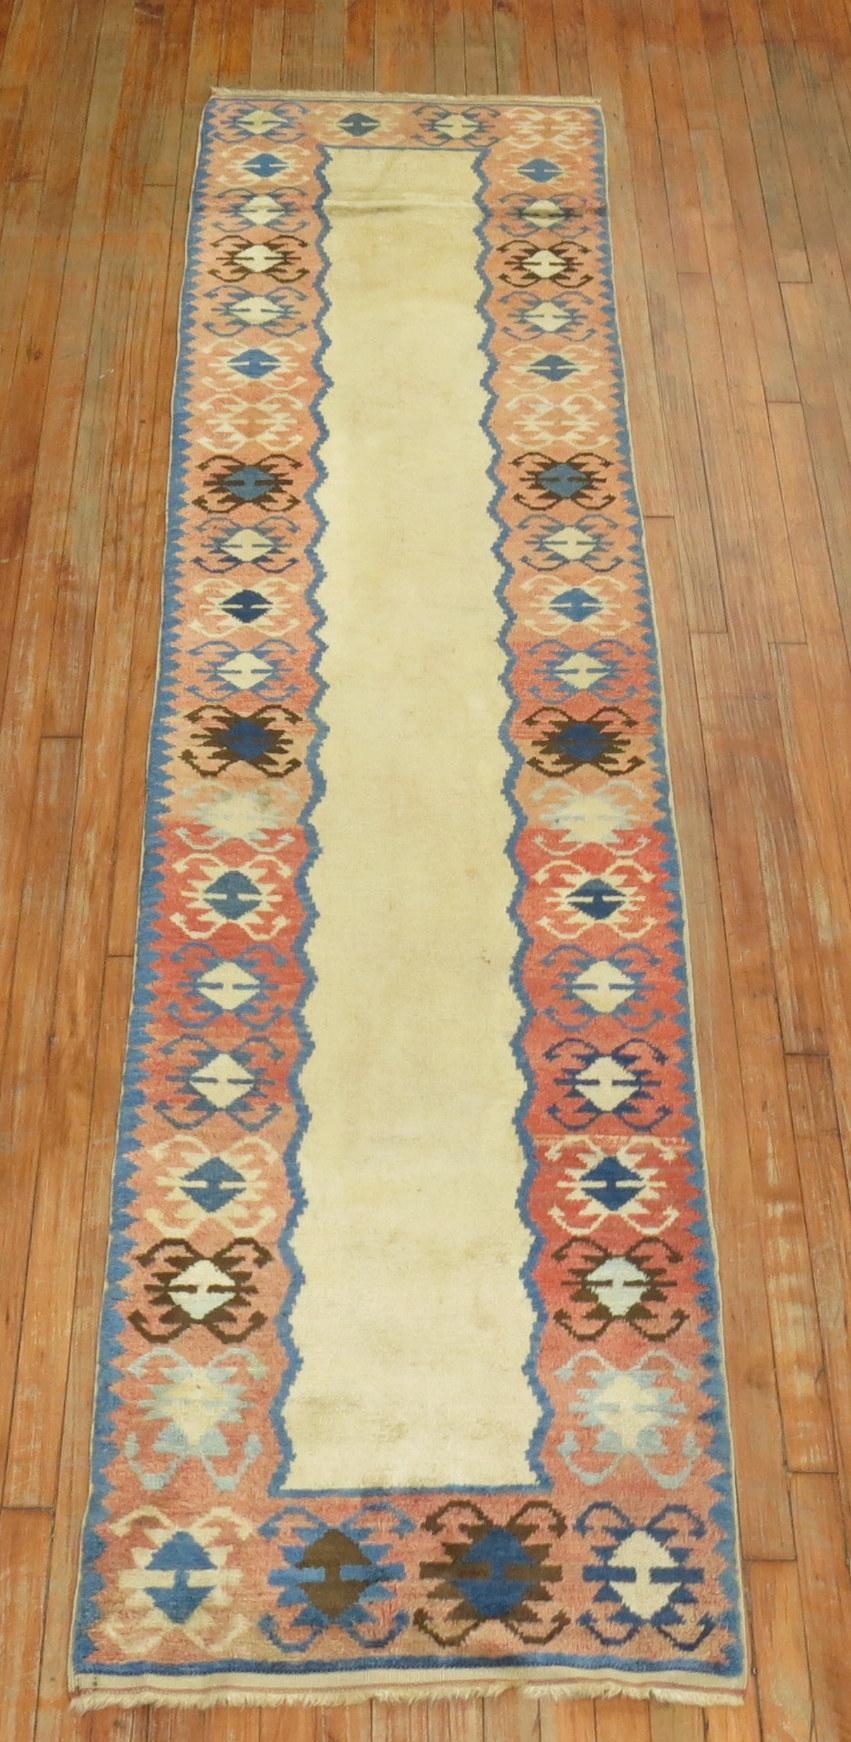 A narrow runner mid-20th century Turkish runner resembling American Navajo rugs.